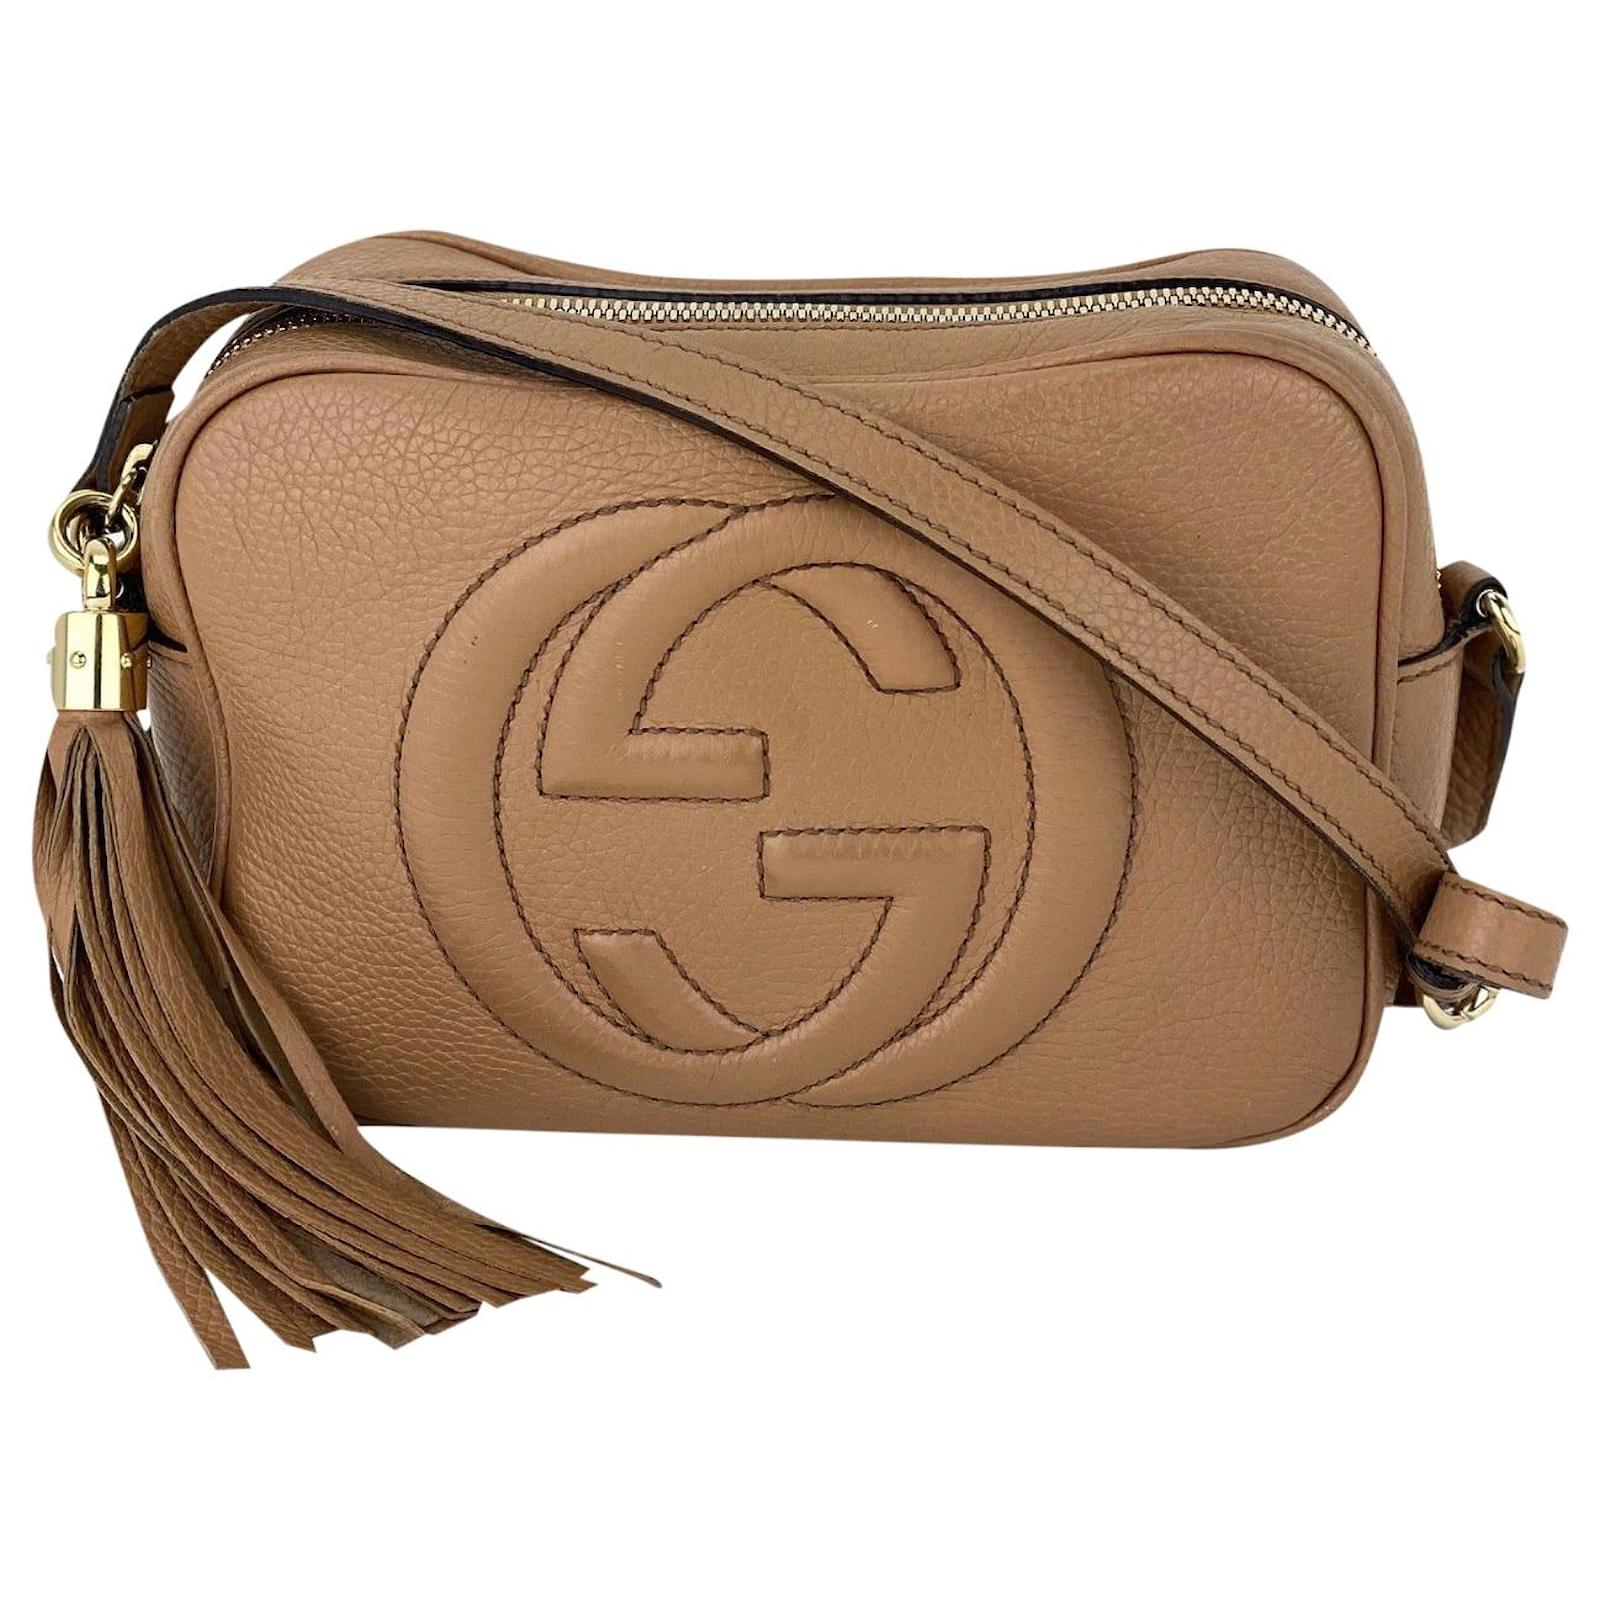 Gucci - Soho Beige Leather Large Hobo Bag